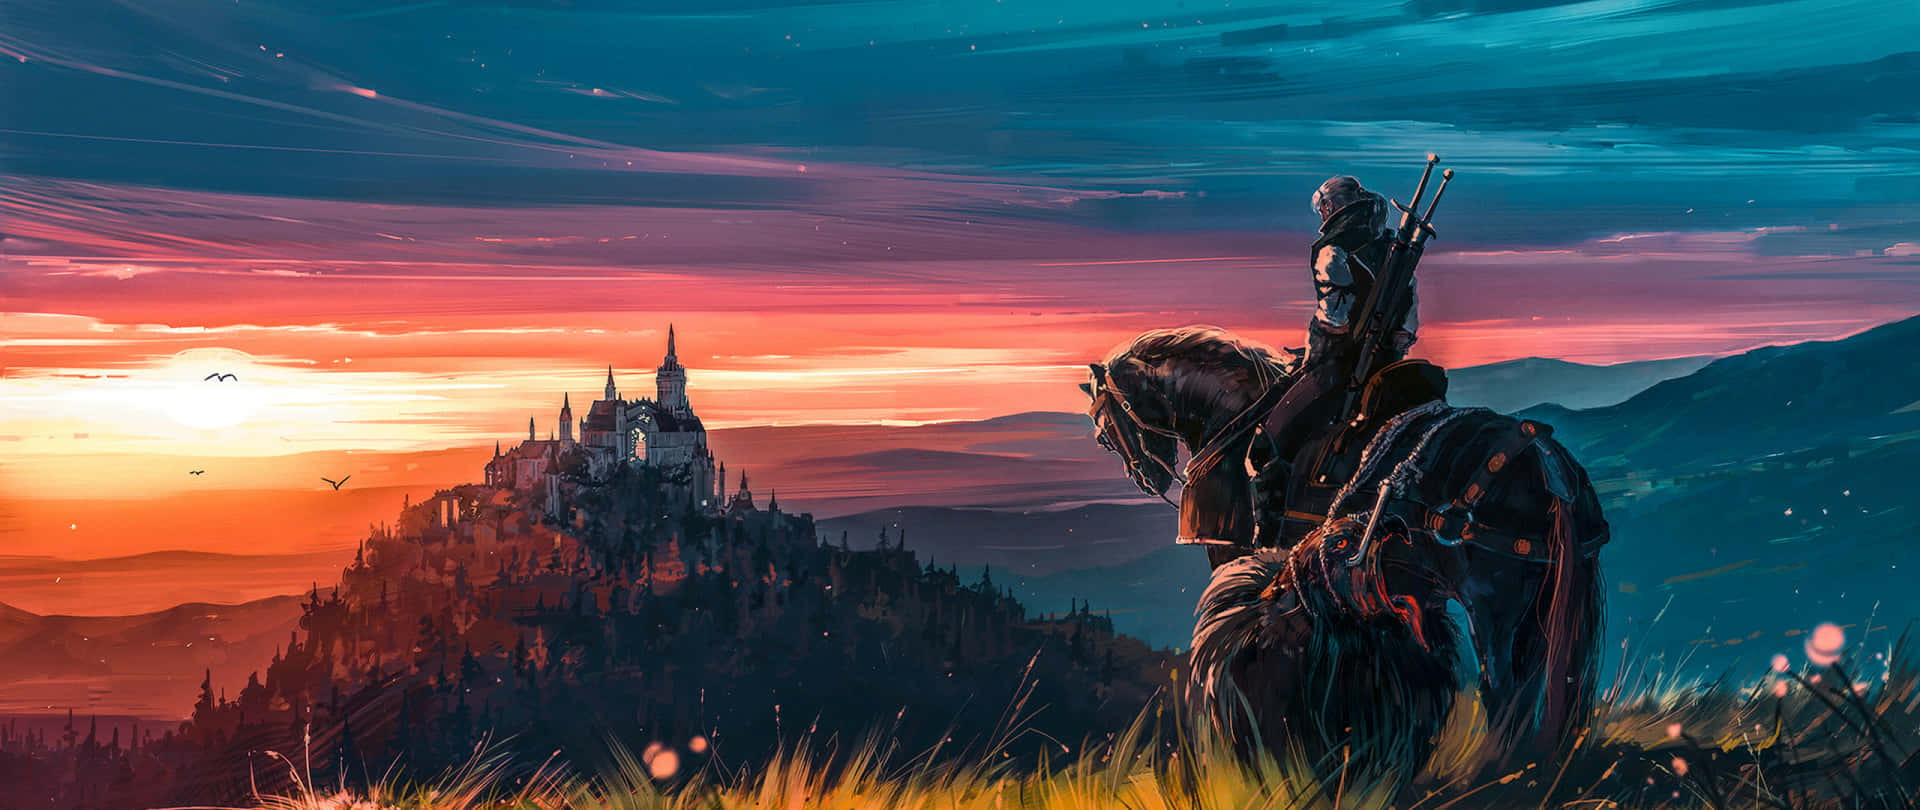 Geraltvon Riva Art 2560x1080 Wallpaper